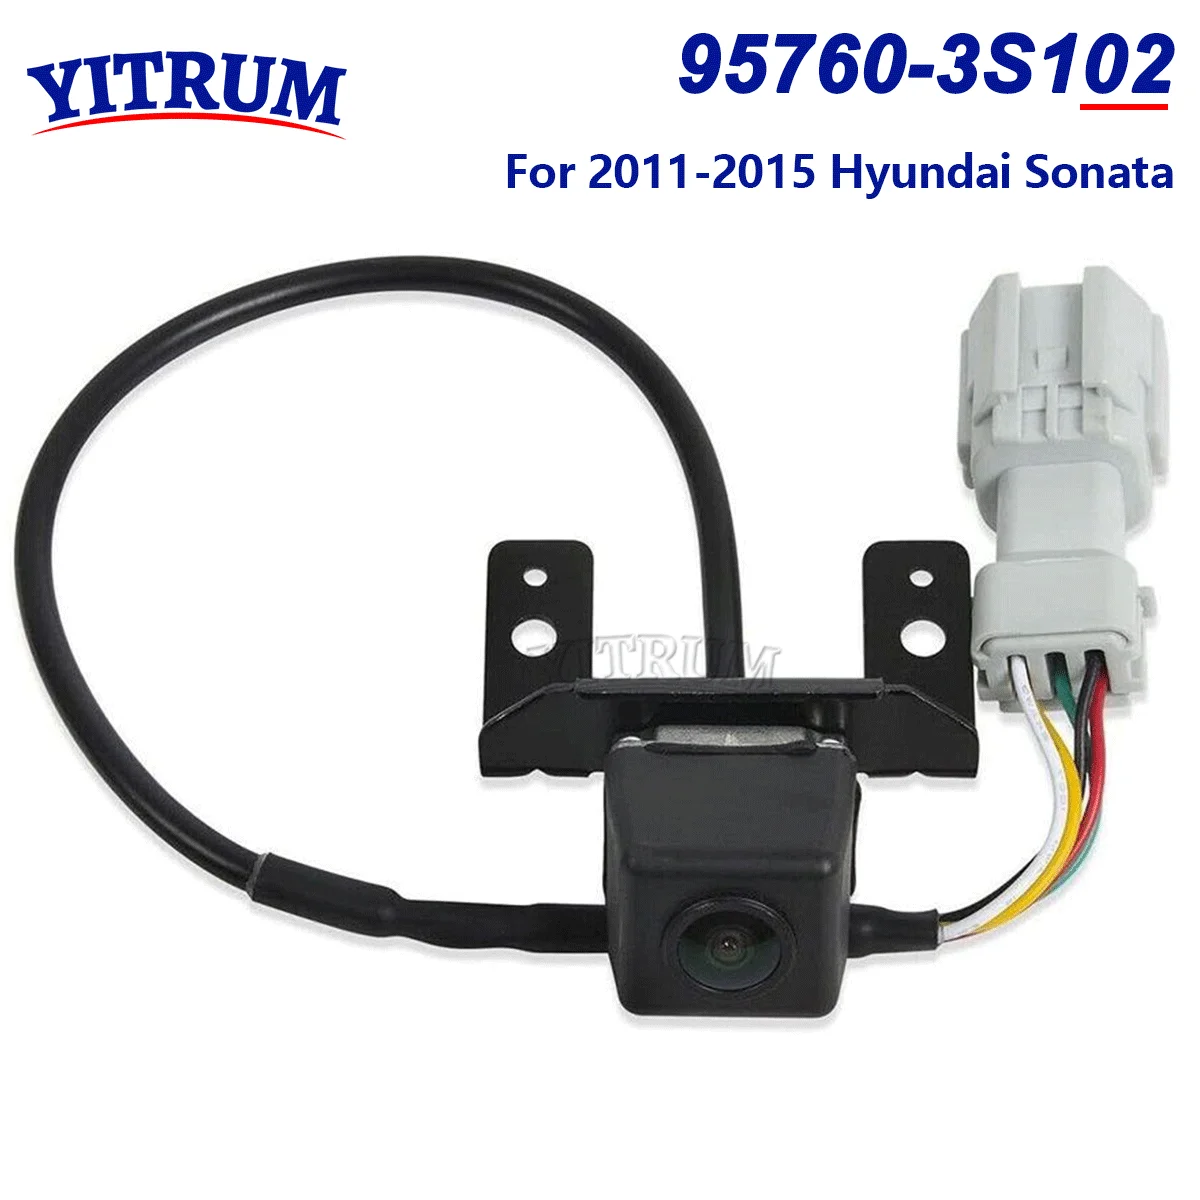 

YITRUM 95760-3S102 For 2011-2015 Hyundai Sonata Rear View Backup Parking Reverse Camera Reverse Parking Assistant 957603S102